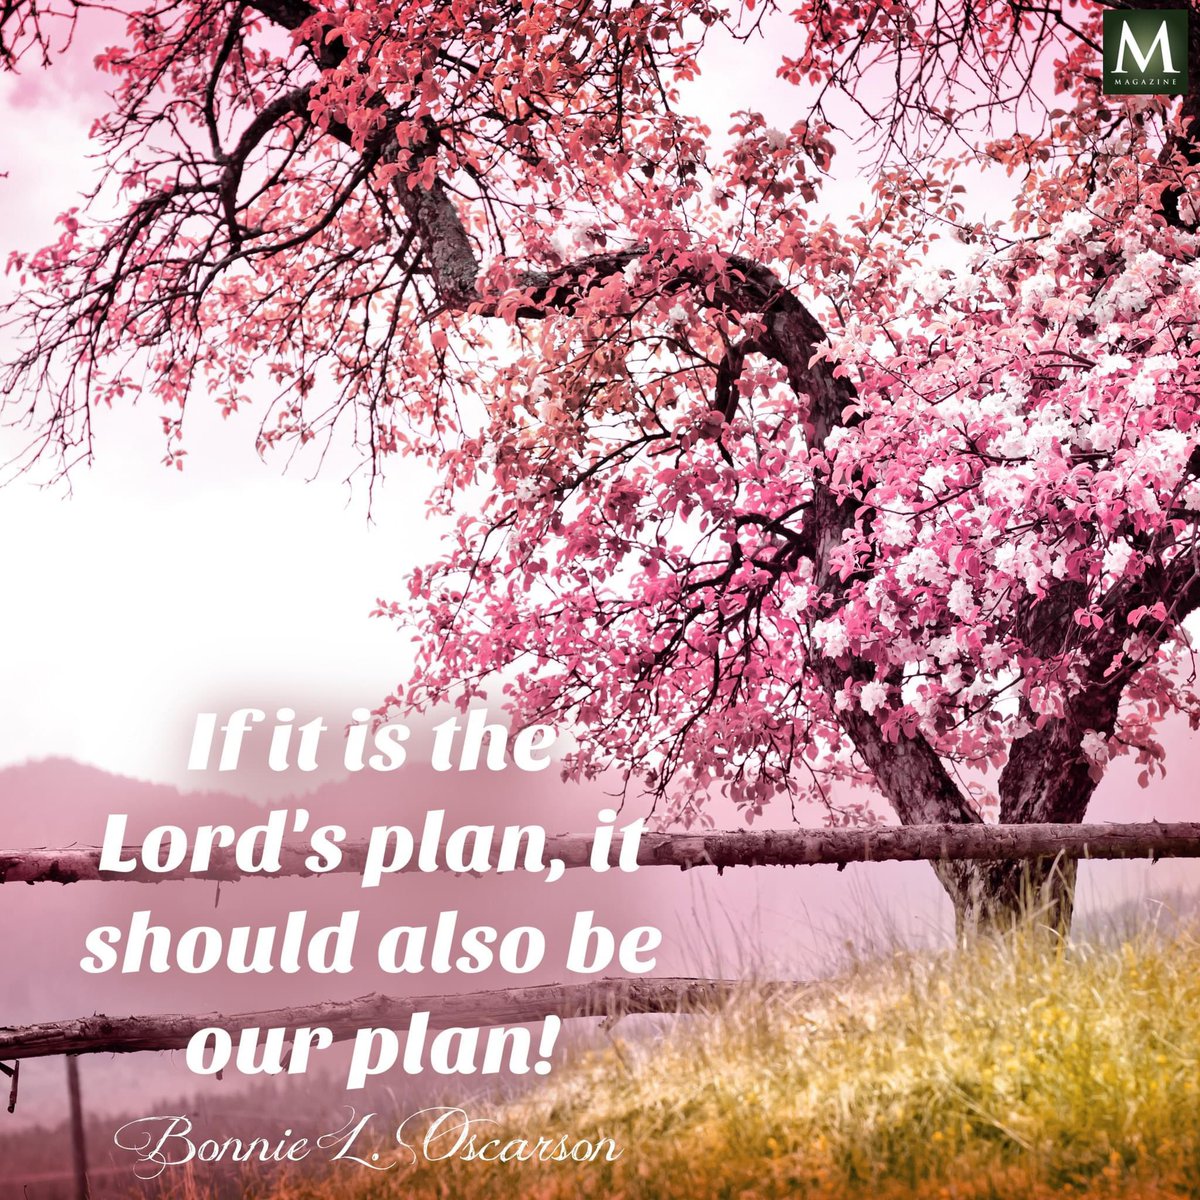 “If it is the Lord's plan, it should also be our plan!' ~ Sister Bonnie L. Oscarson 

#HearHim #HisDay #TrustGod #GodLovesYou #ComeUntoChrist #CountOnHim #EmbraceHim #ChildOfGod #BestDay #ShareGoodness #TheChurchOfJesusChristOfLatterDaySaints